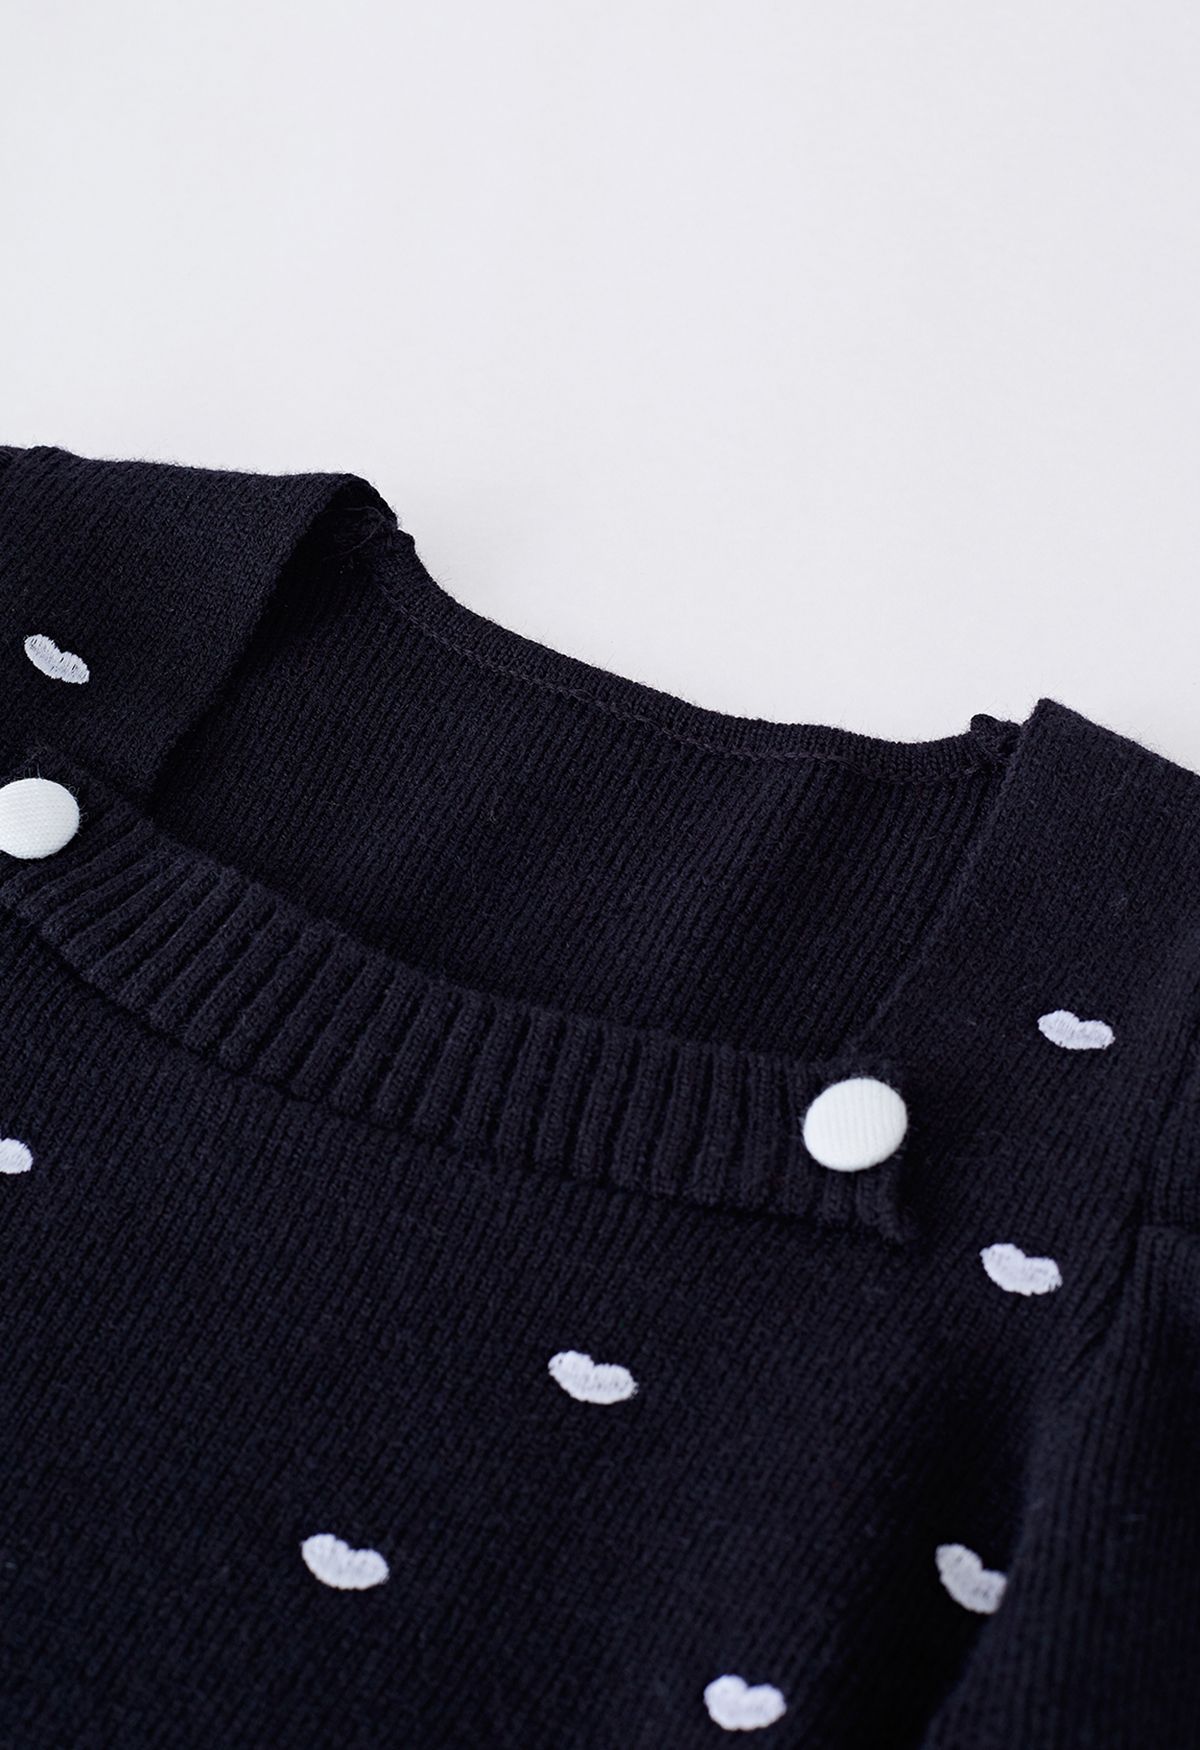 Full of Little Heart Square Neck Knit Sweater in Black